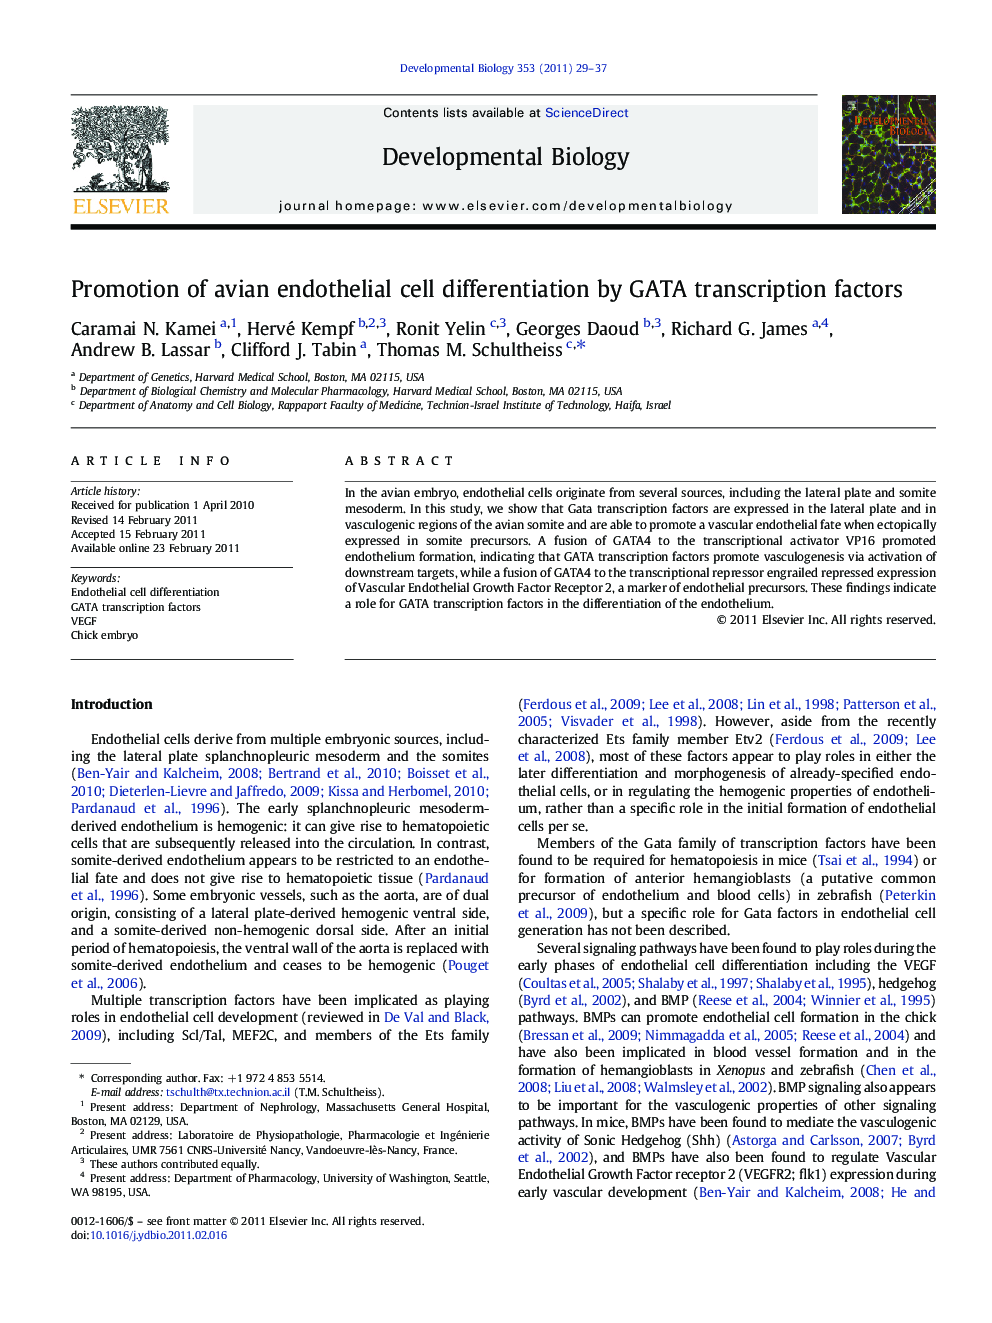 Promotion of avian endothelial cell differentiation by GATA transcription factors